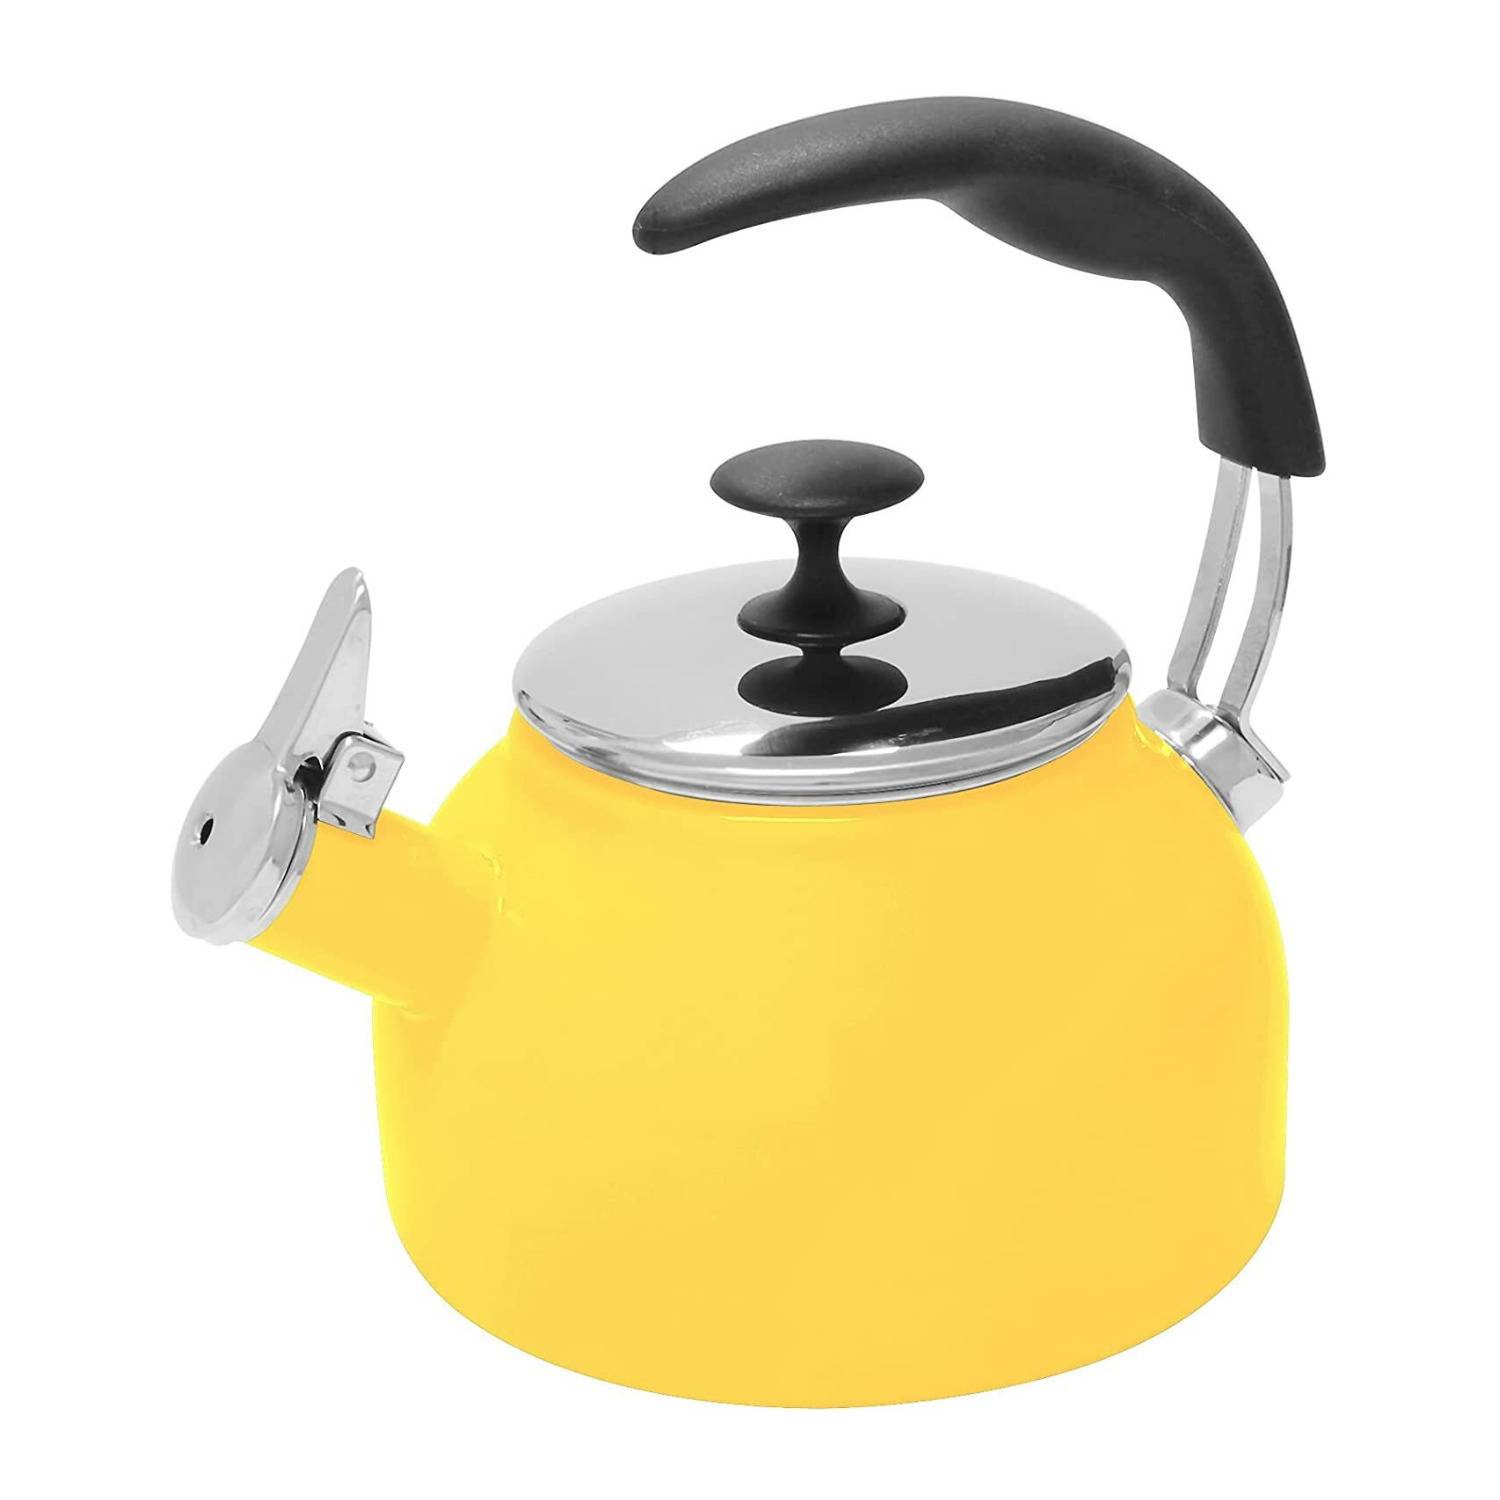 Chantal Ceylon Enamel-on-Steel Whistling Tea kettle (1.6-Quart, Canary Yellow)